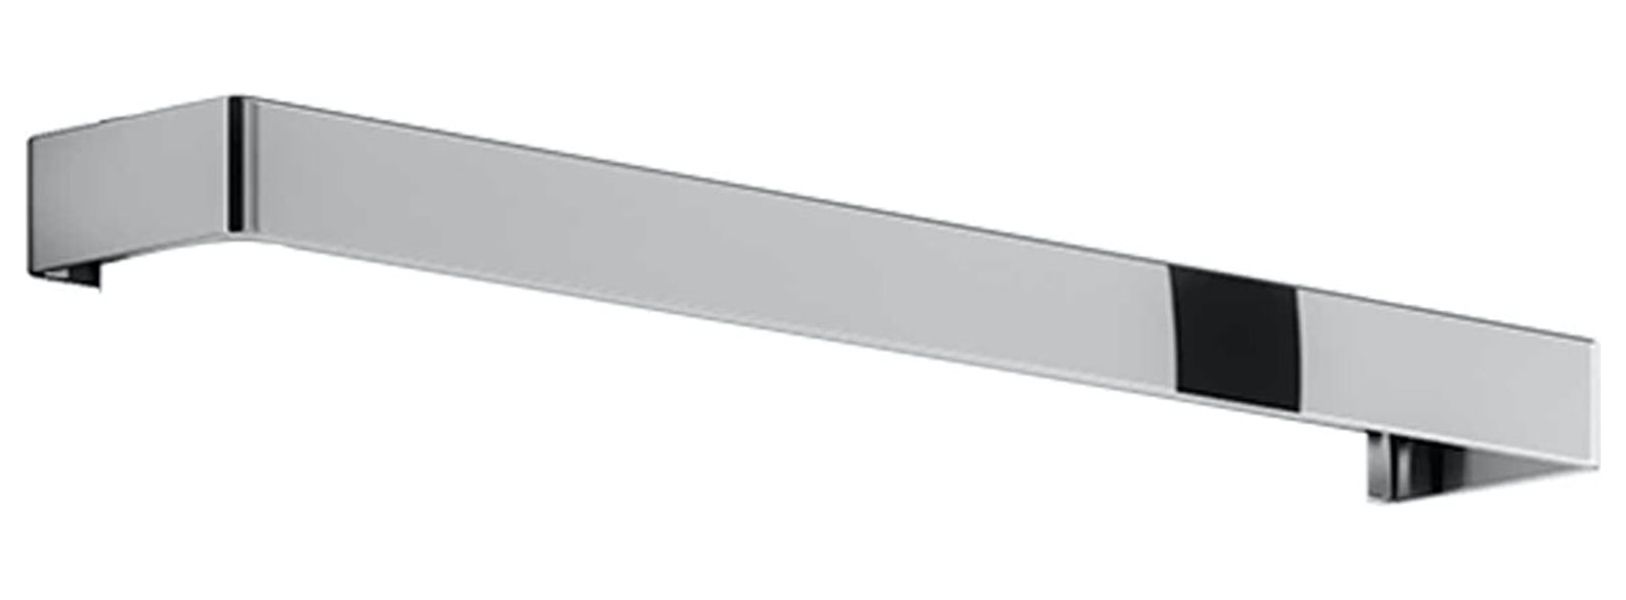 Image of Wickes Polished Chrome Towel Rail for Glass Radiator - 550mm x 190mm